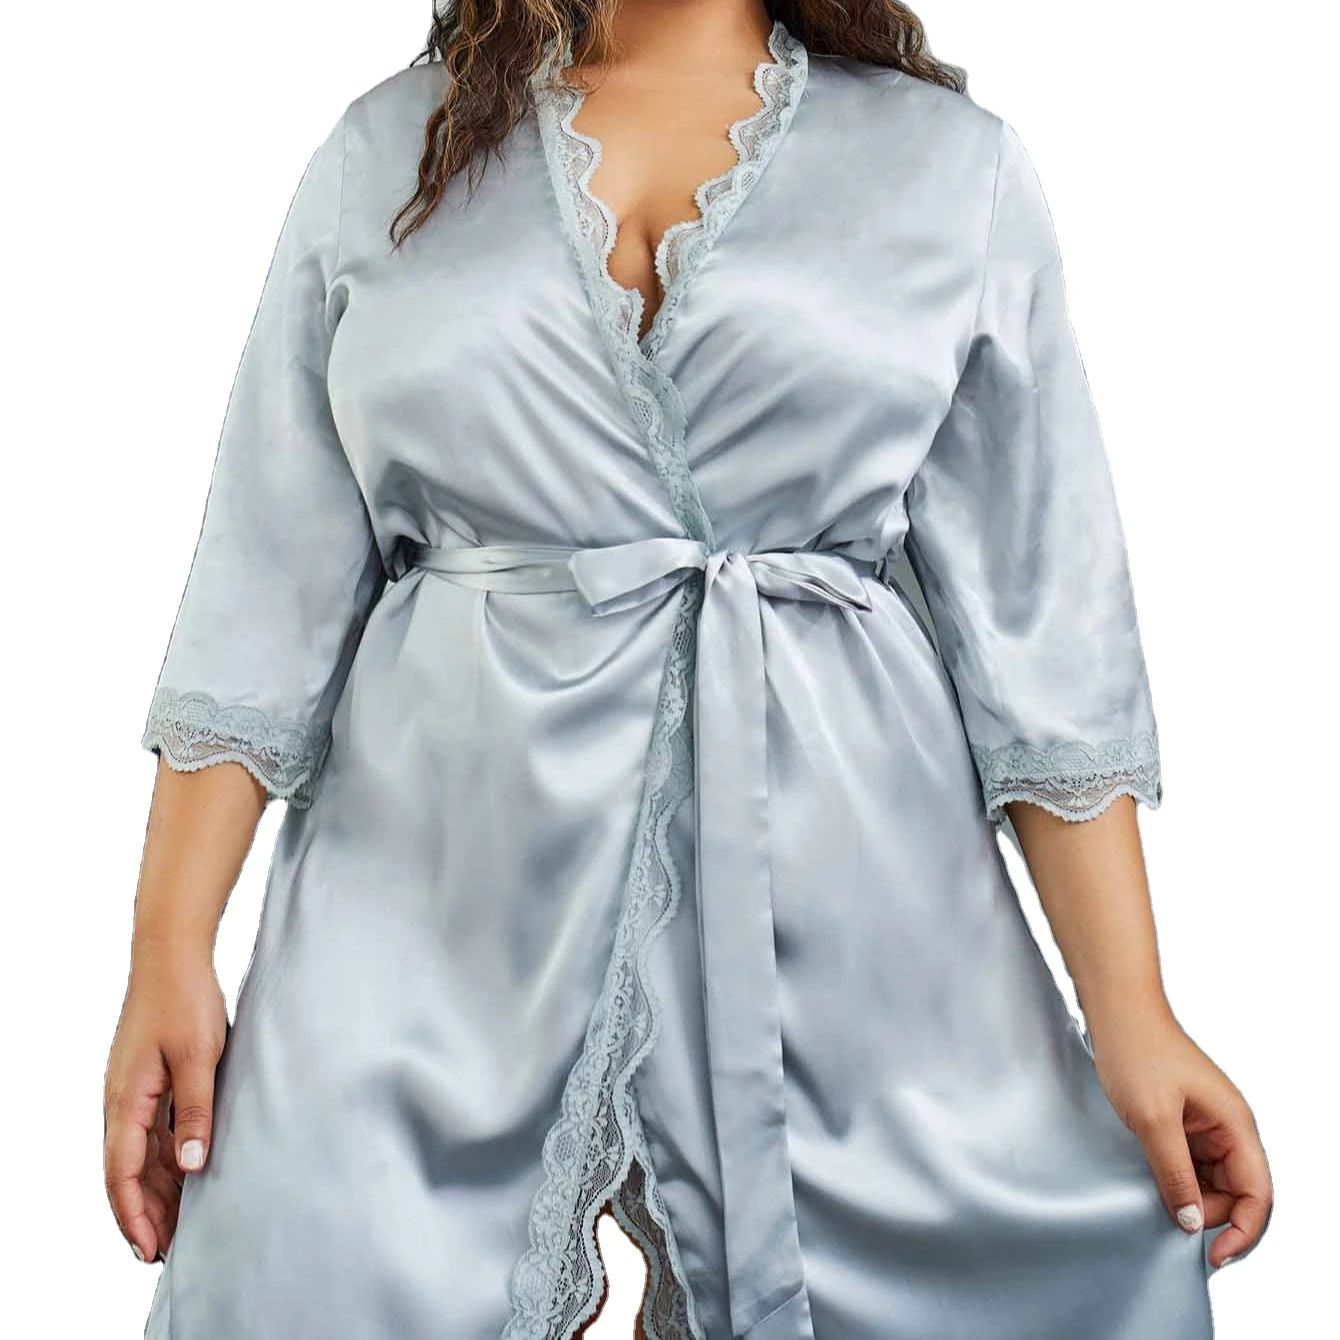 

2022 Sleep wear Plus Size Comfortable and high quality silk pajama set women's bathrobe sexy kimono sweetheartwedding gown, Picture shows